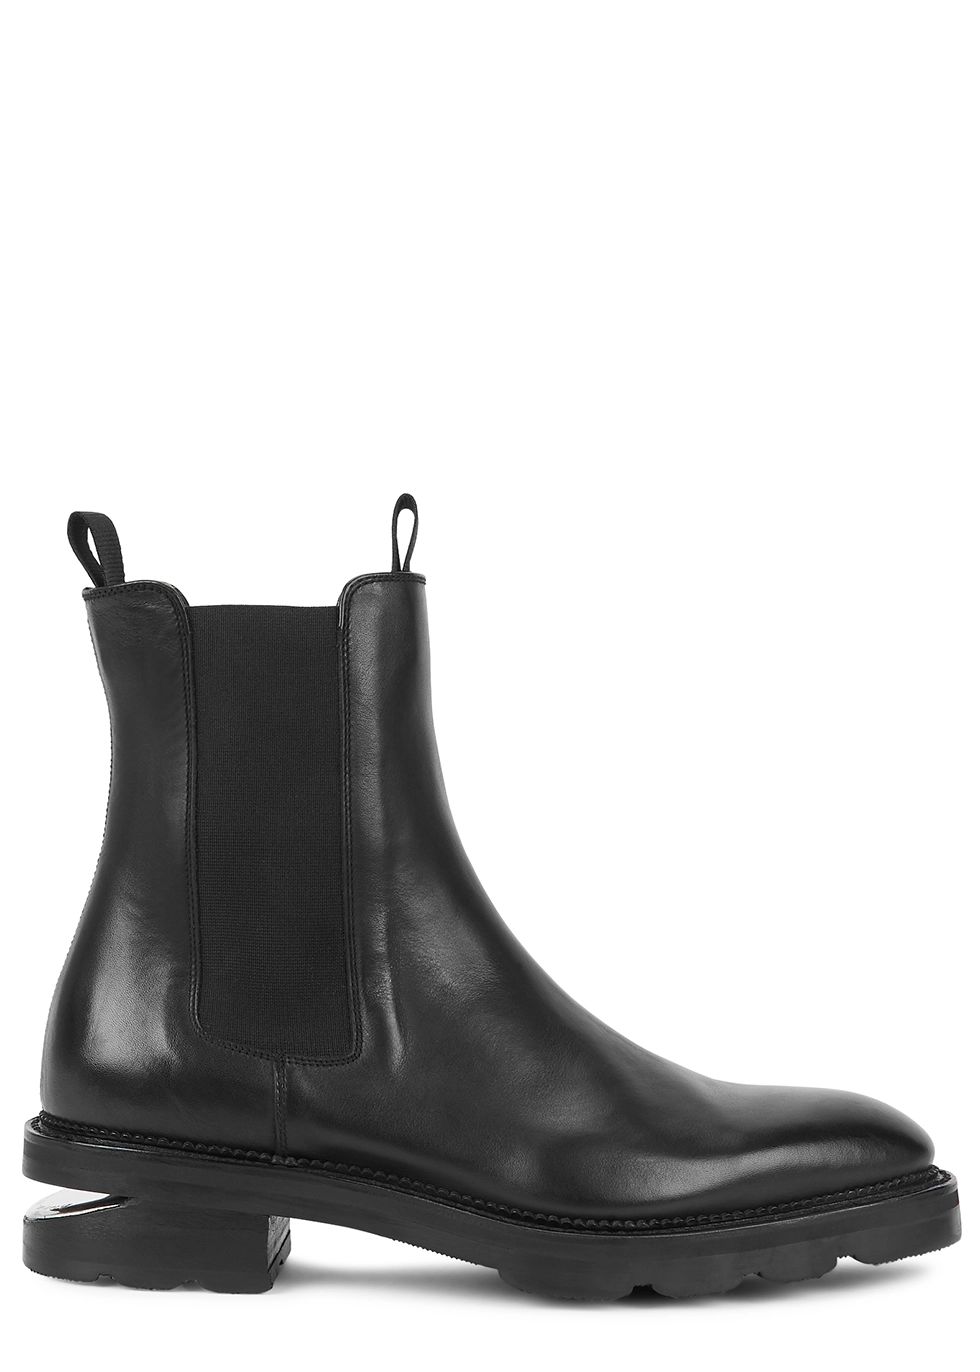 Andy black leather Chelsea boots | Harvey Nichols (Global)